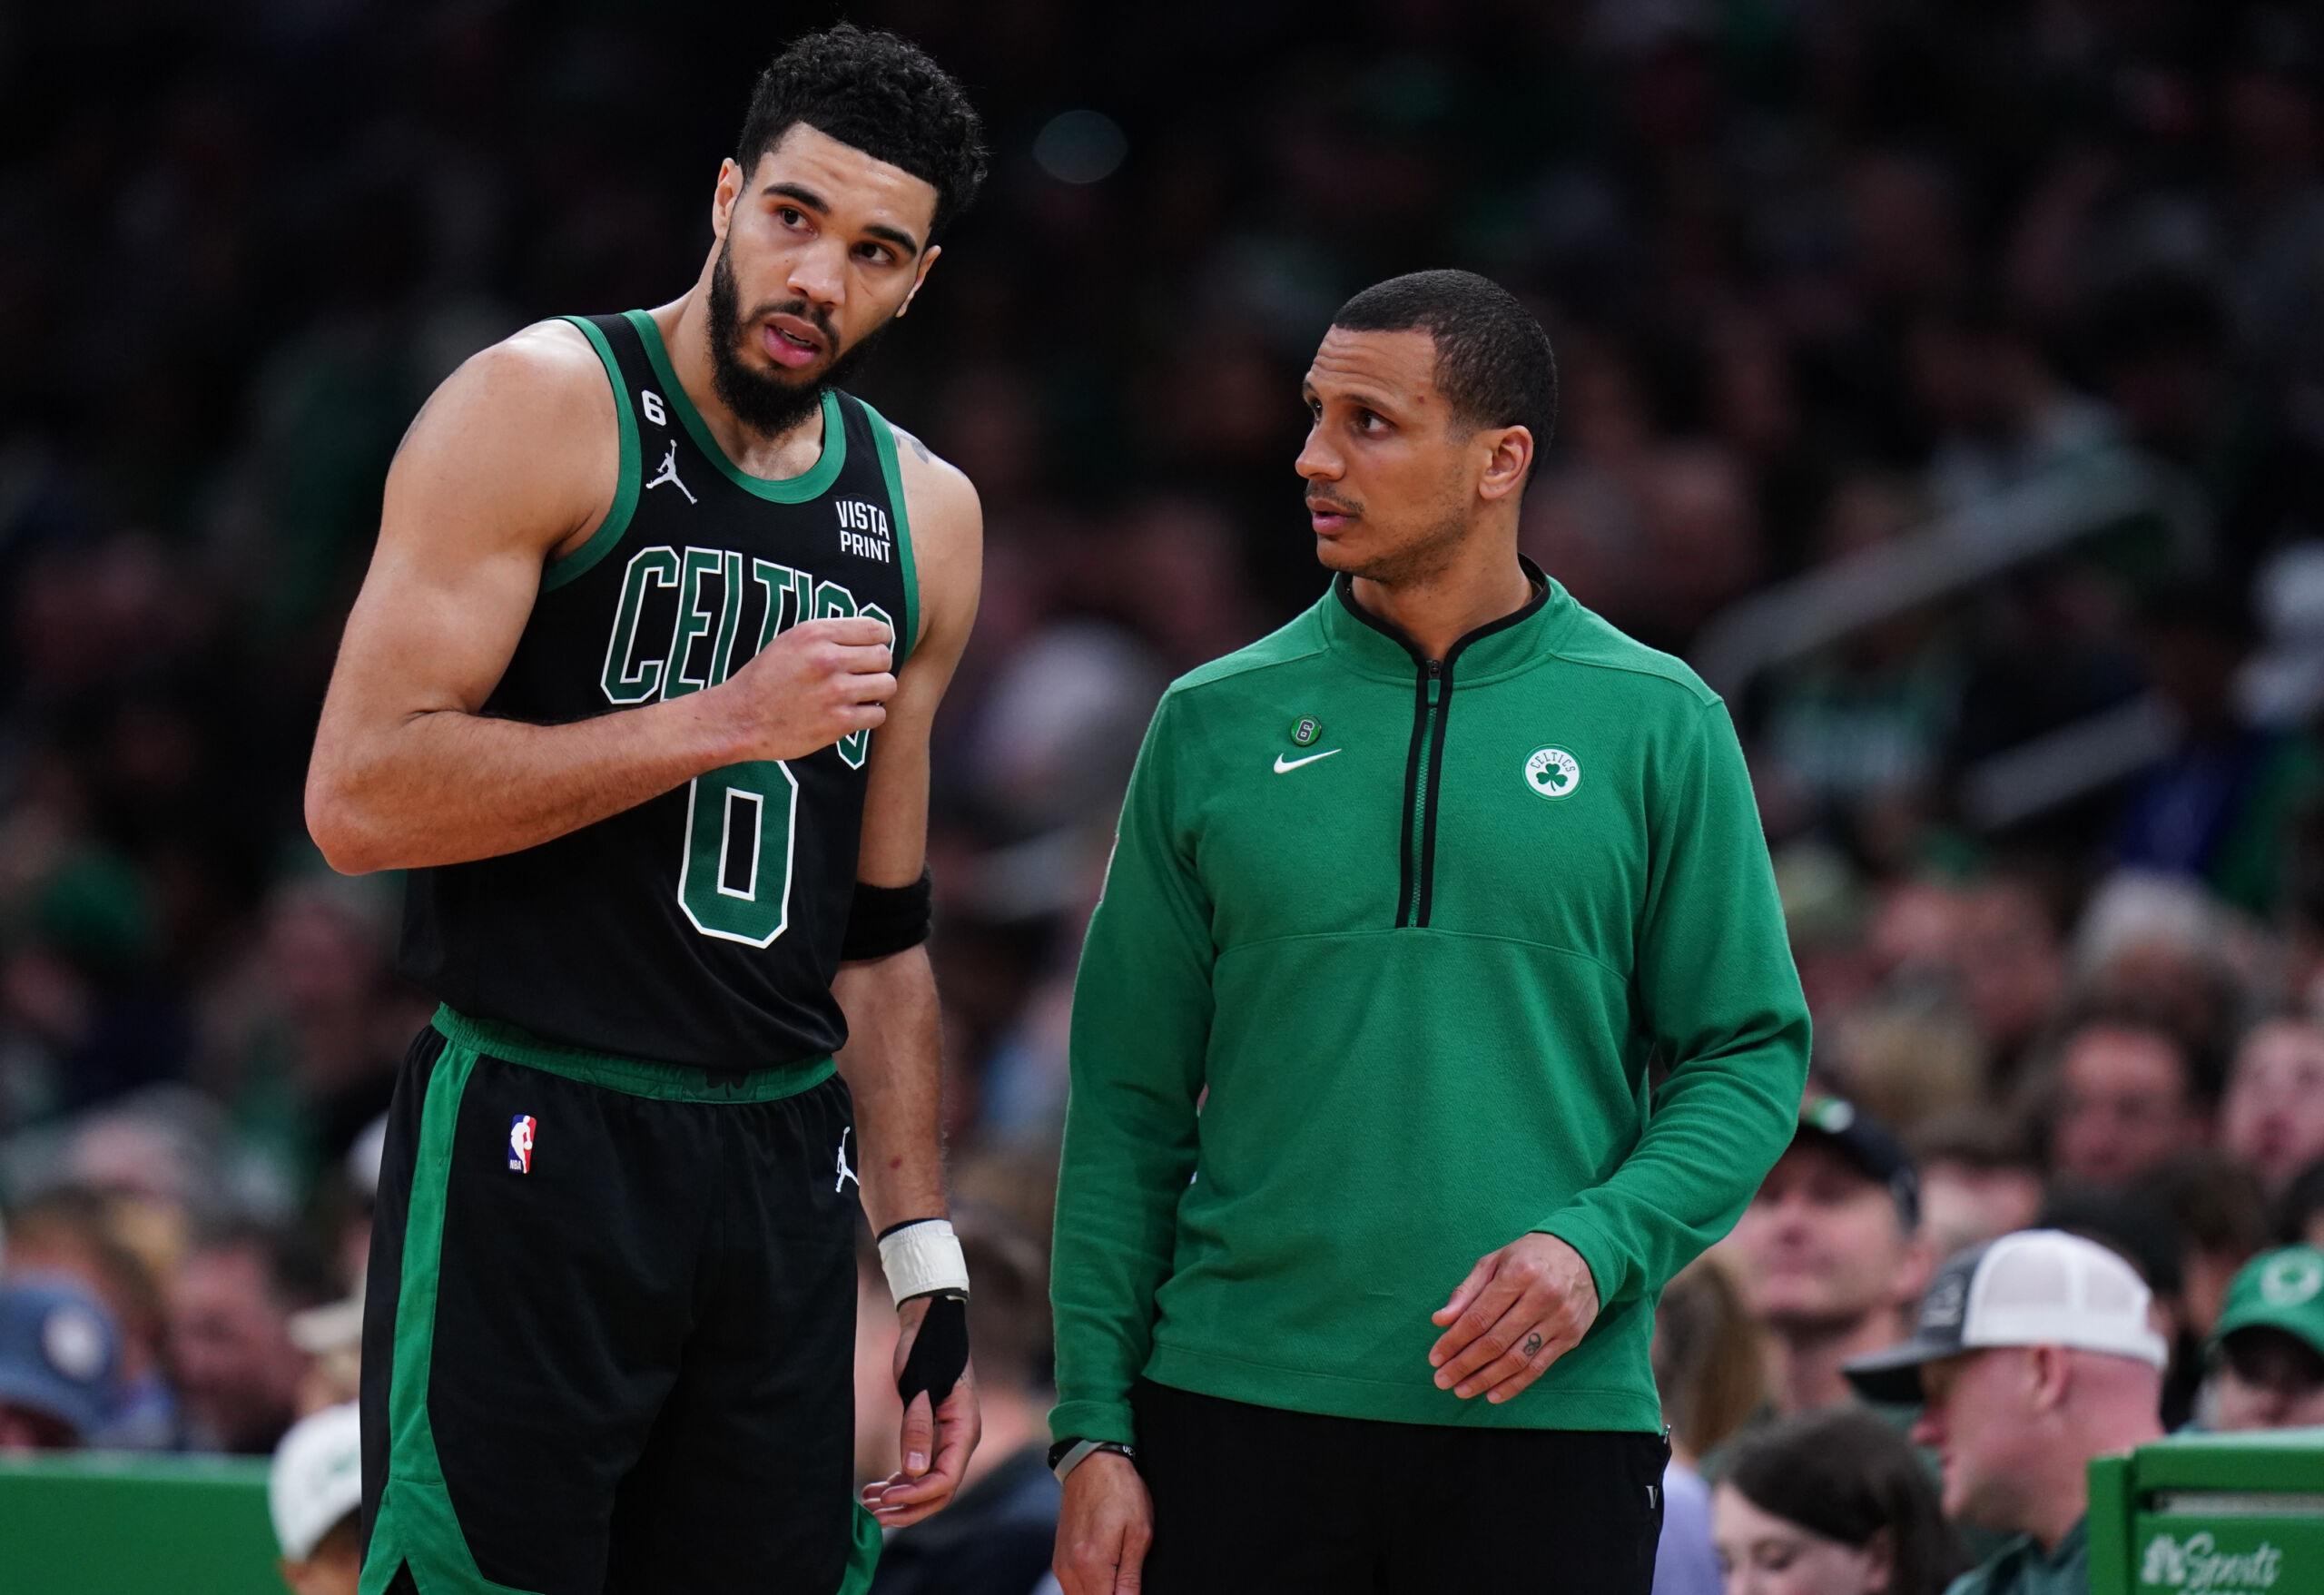 Marcus Smart reflects on rookie season with Celtics - The Boston Globe